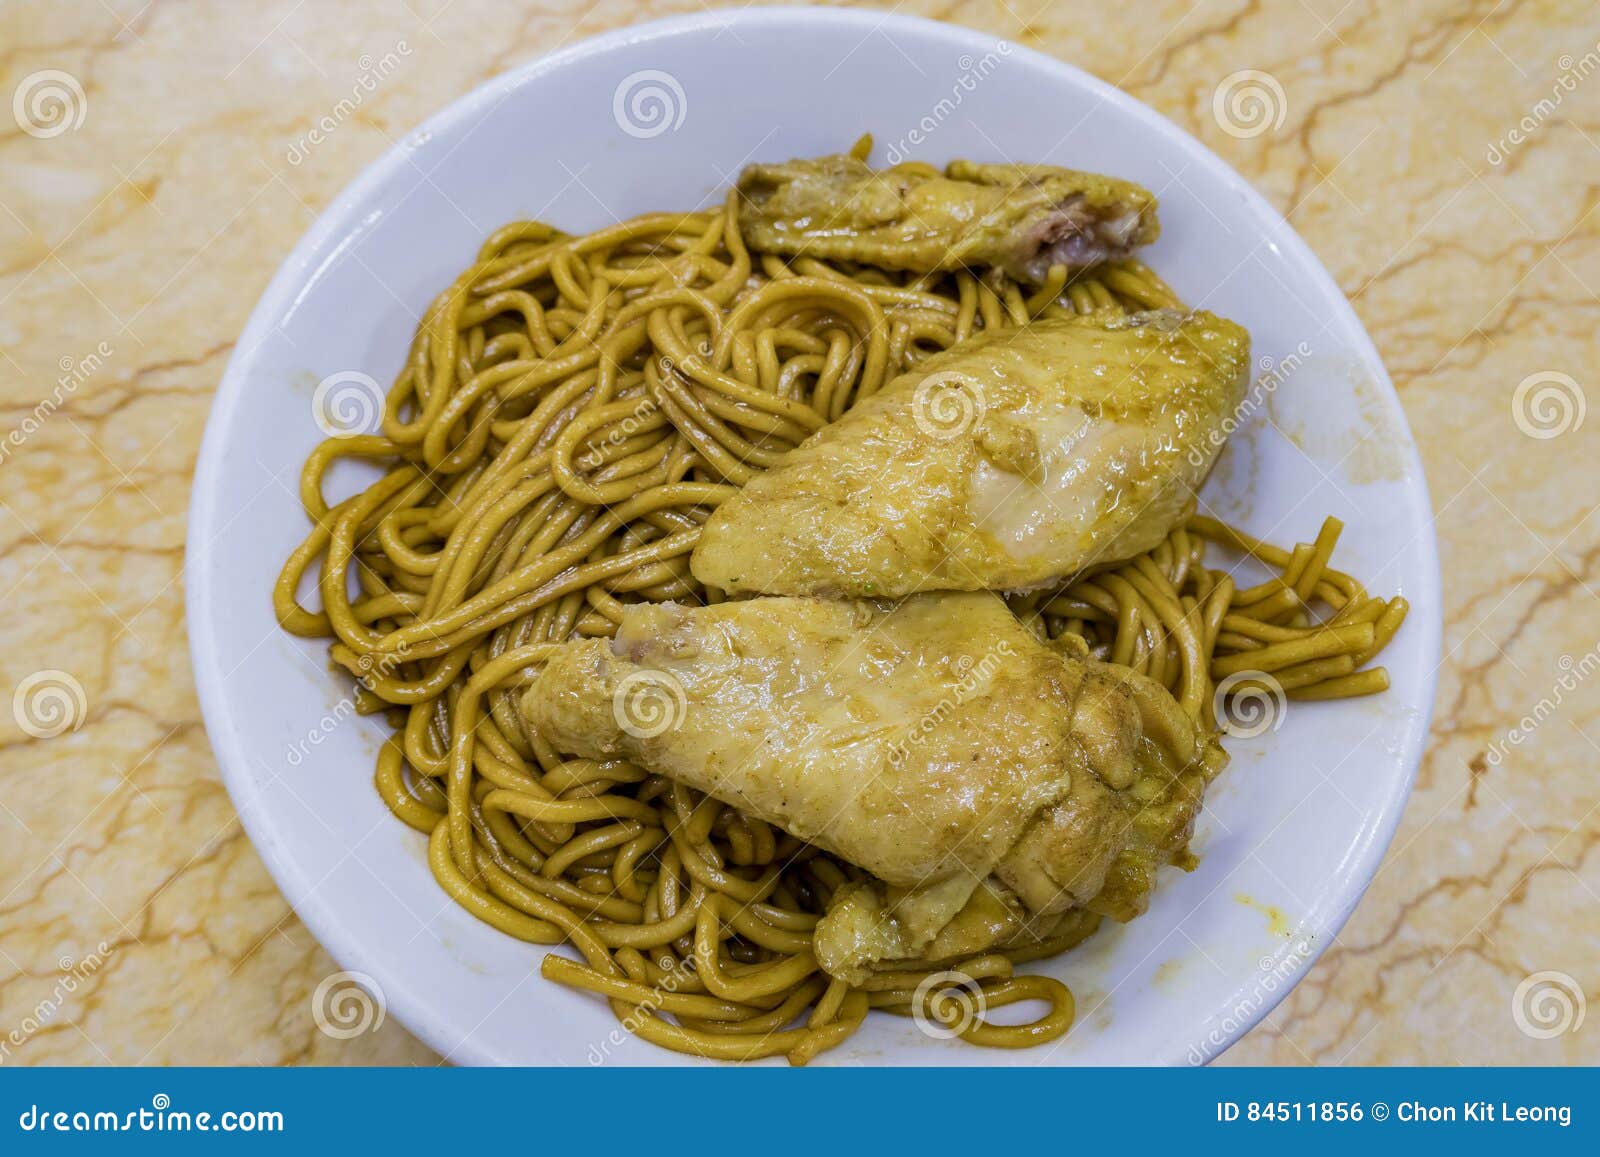 delicious noodles in restaurante birmanes nga heong